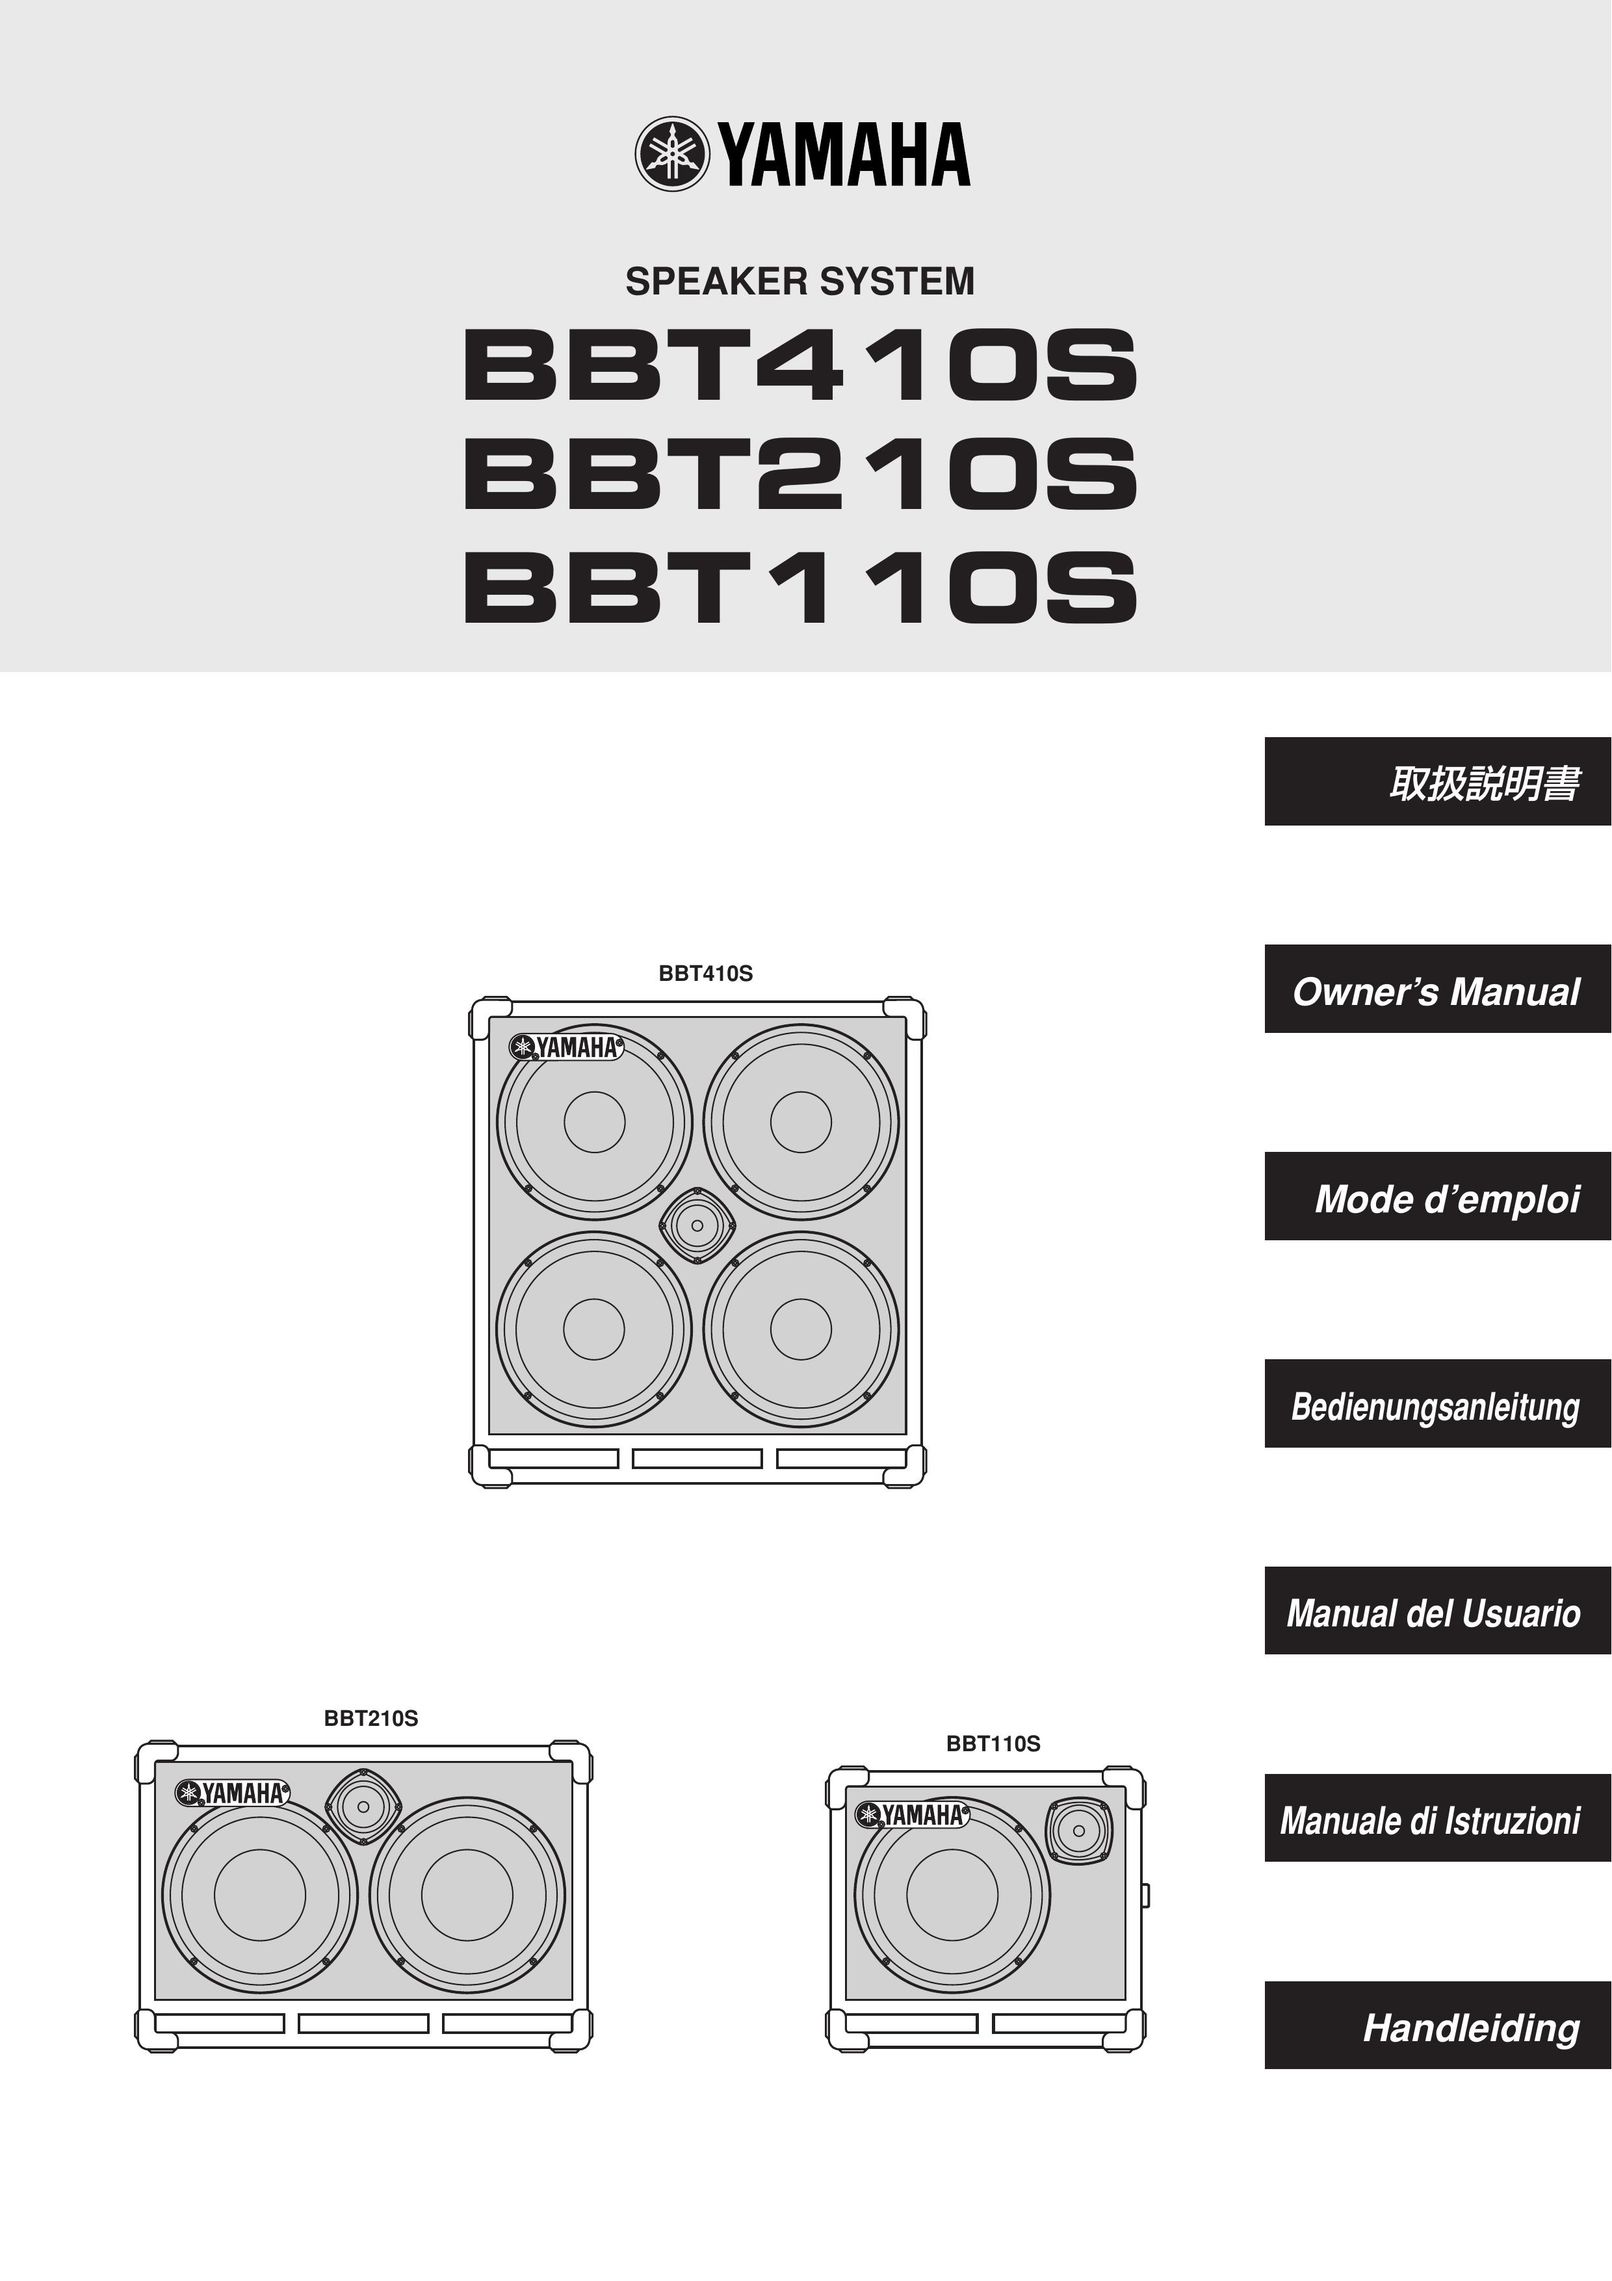 Yamaha BBT110S Speaker System User Manual